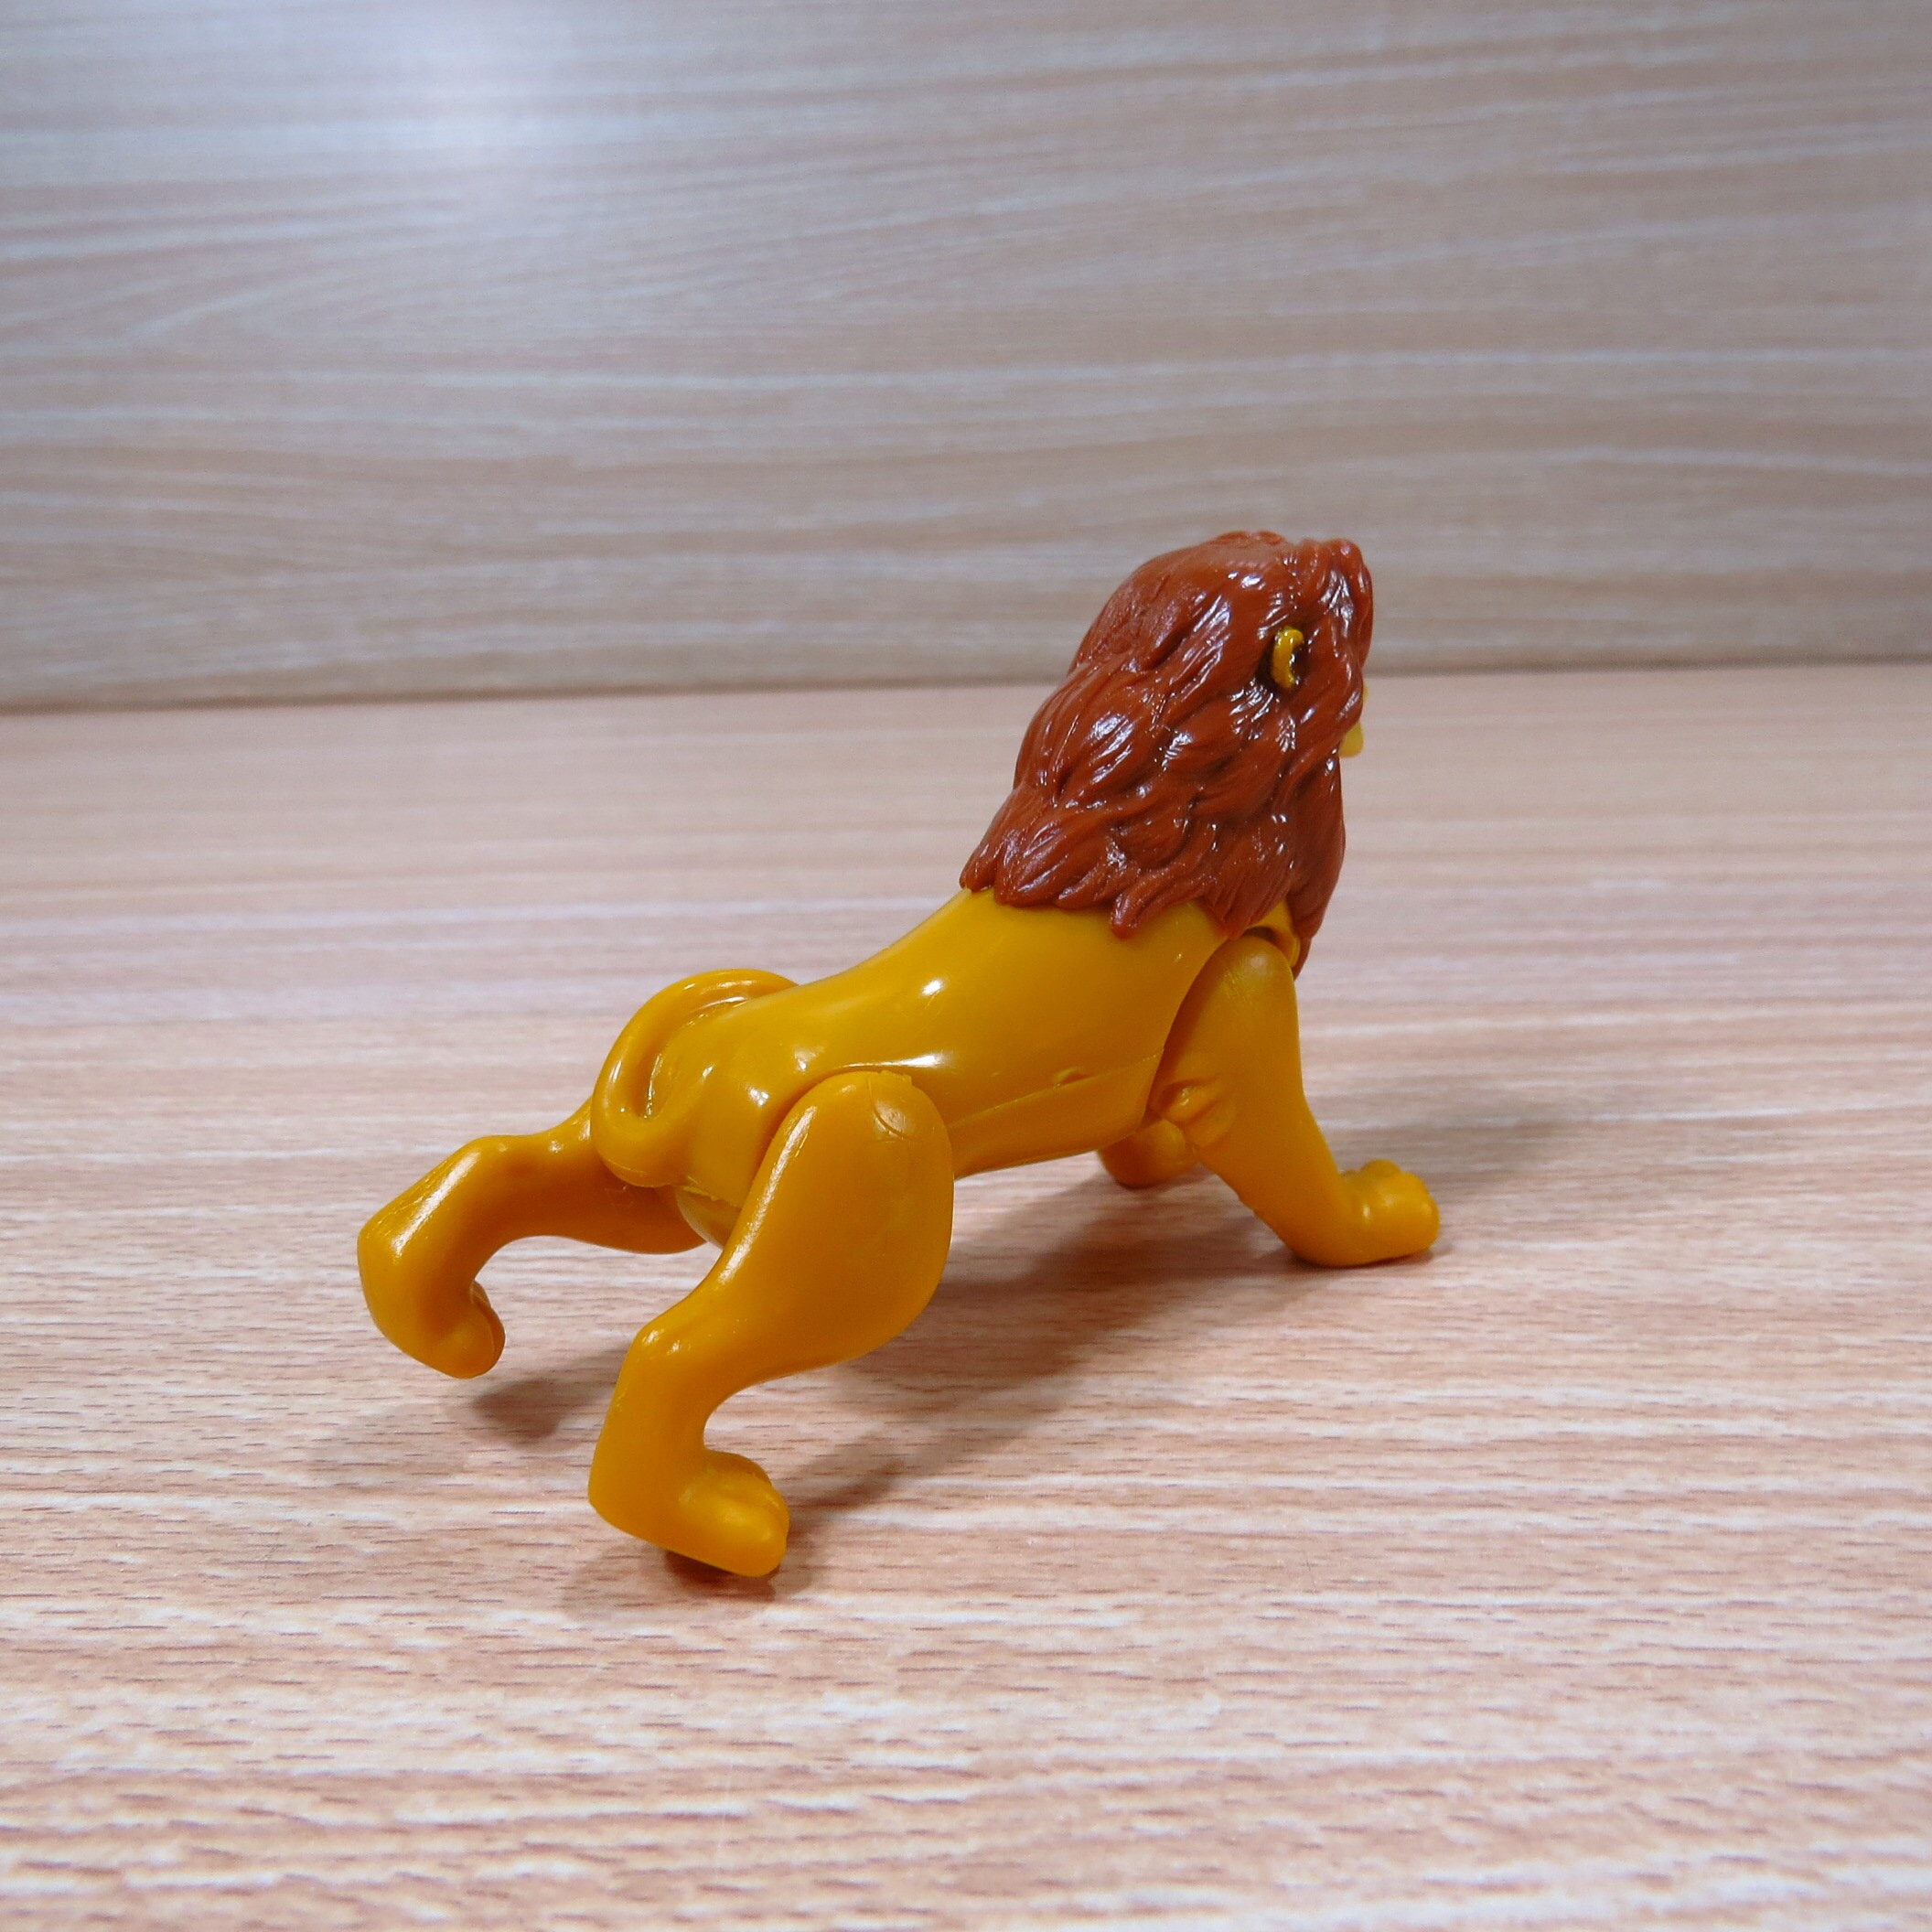 Walt Disney Masterpiece THE LION KING McDonald’s Happy Meal Toy 1996 